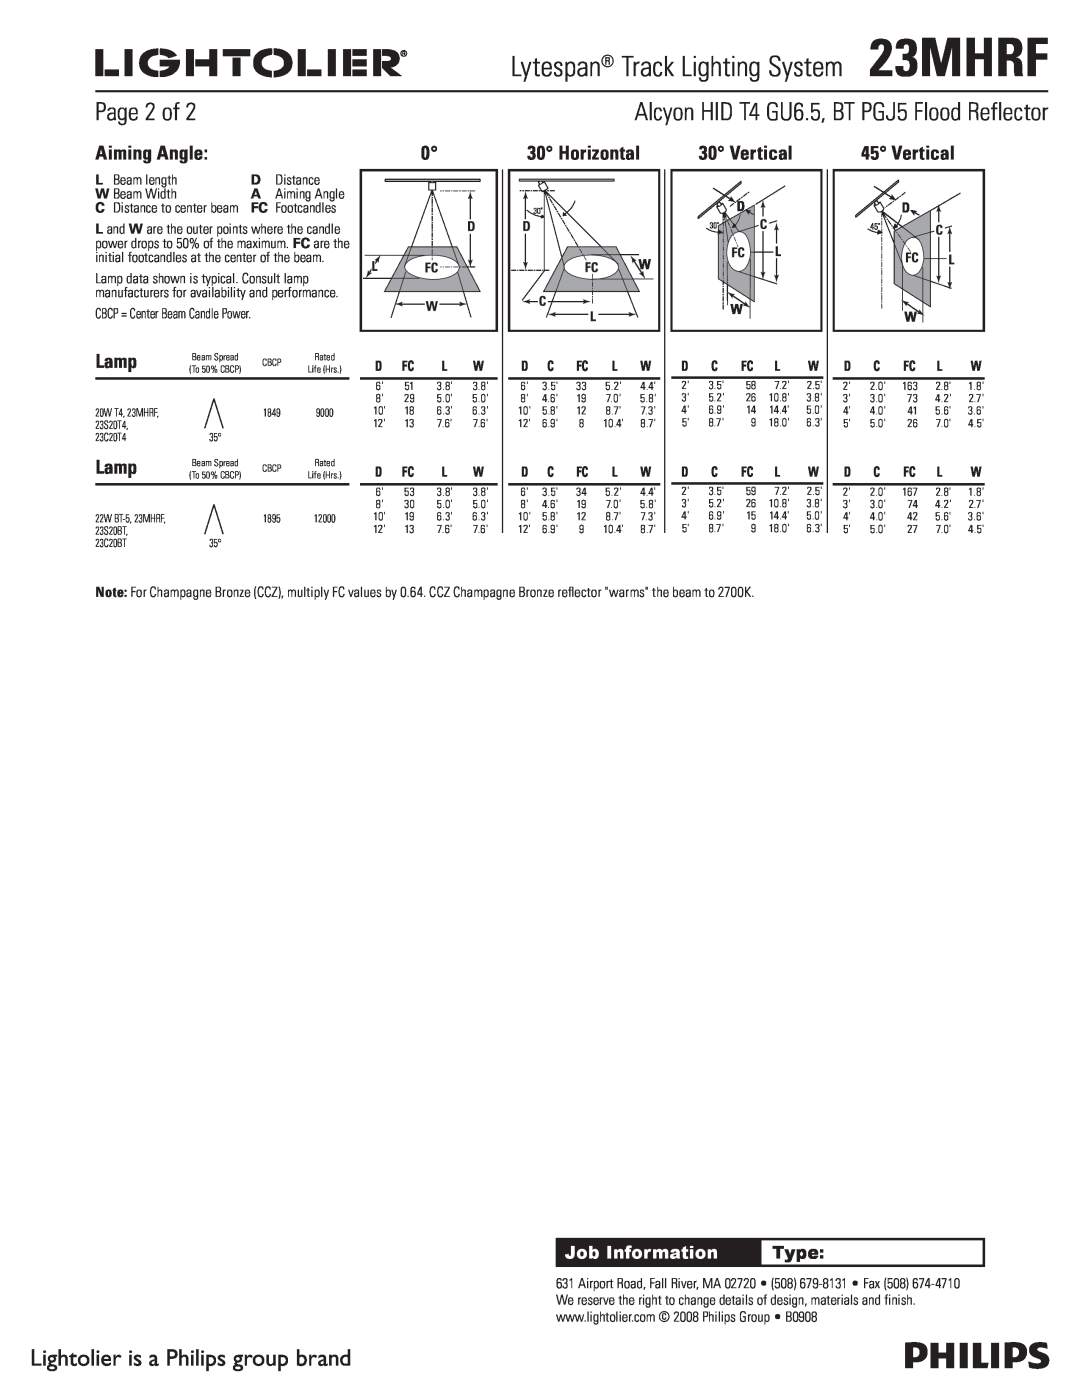 Lightolier Page 2 of, Aiming Angle, Lamp, Horizontal, Vertical, Lytespan Track Lighting System23MHRF, Job Information 